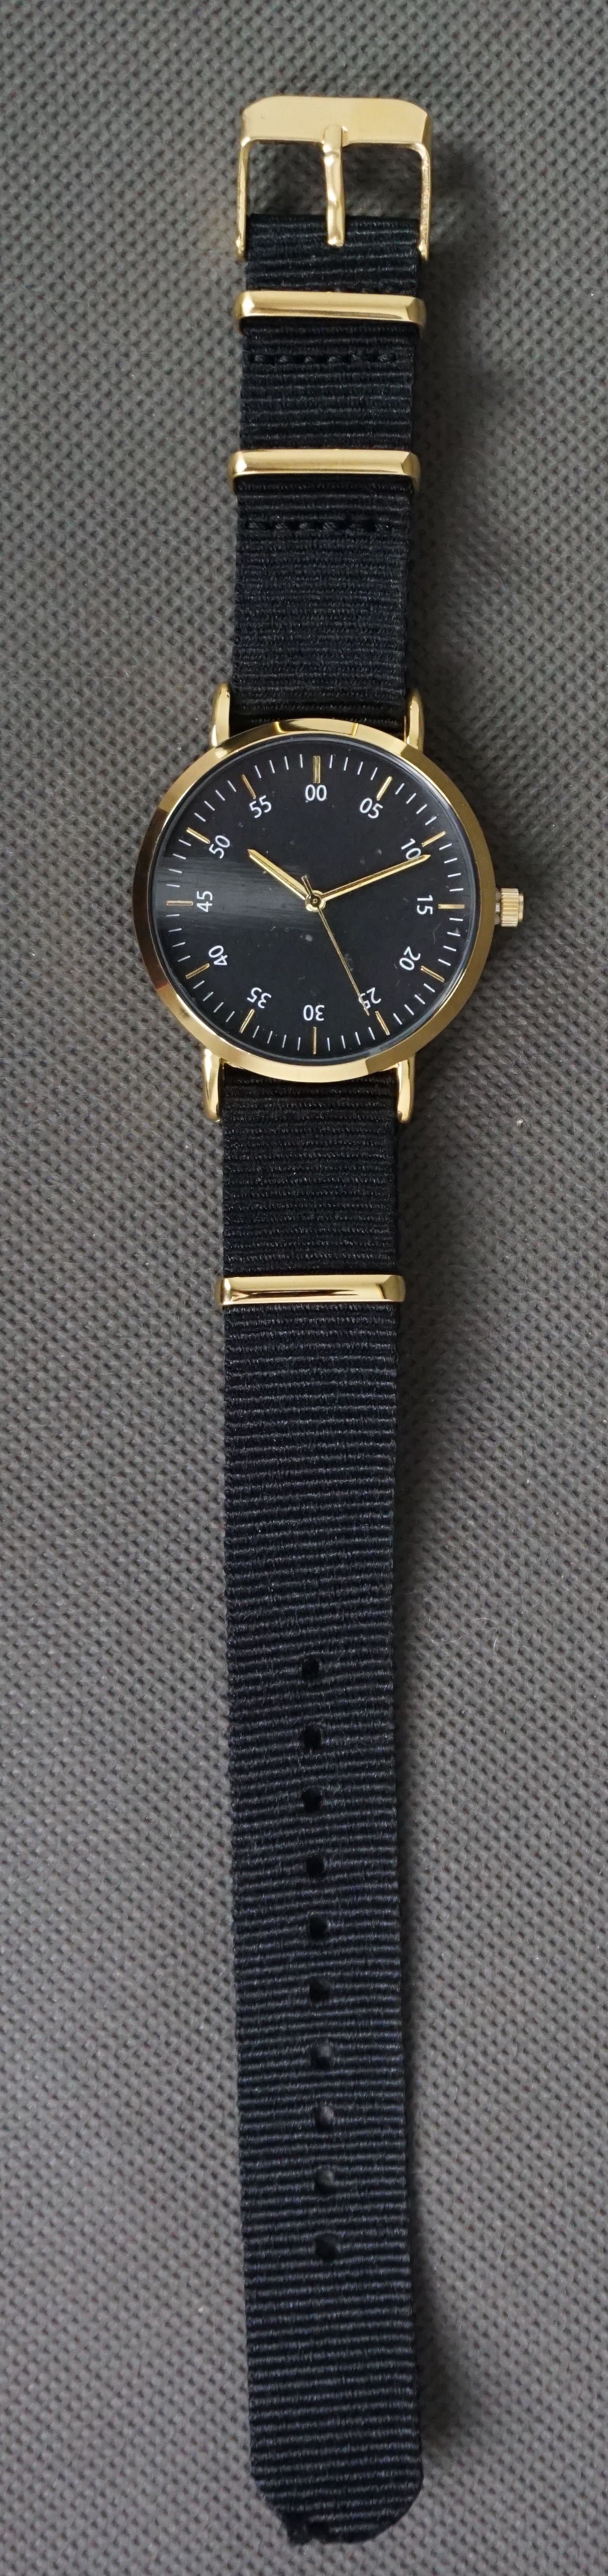 Pier One zegarek black and gold -NEW-